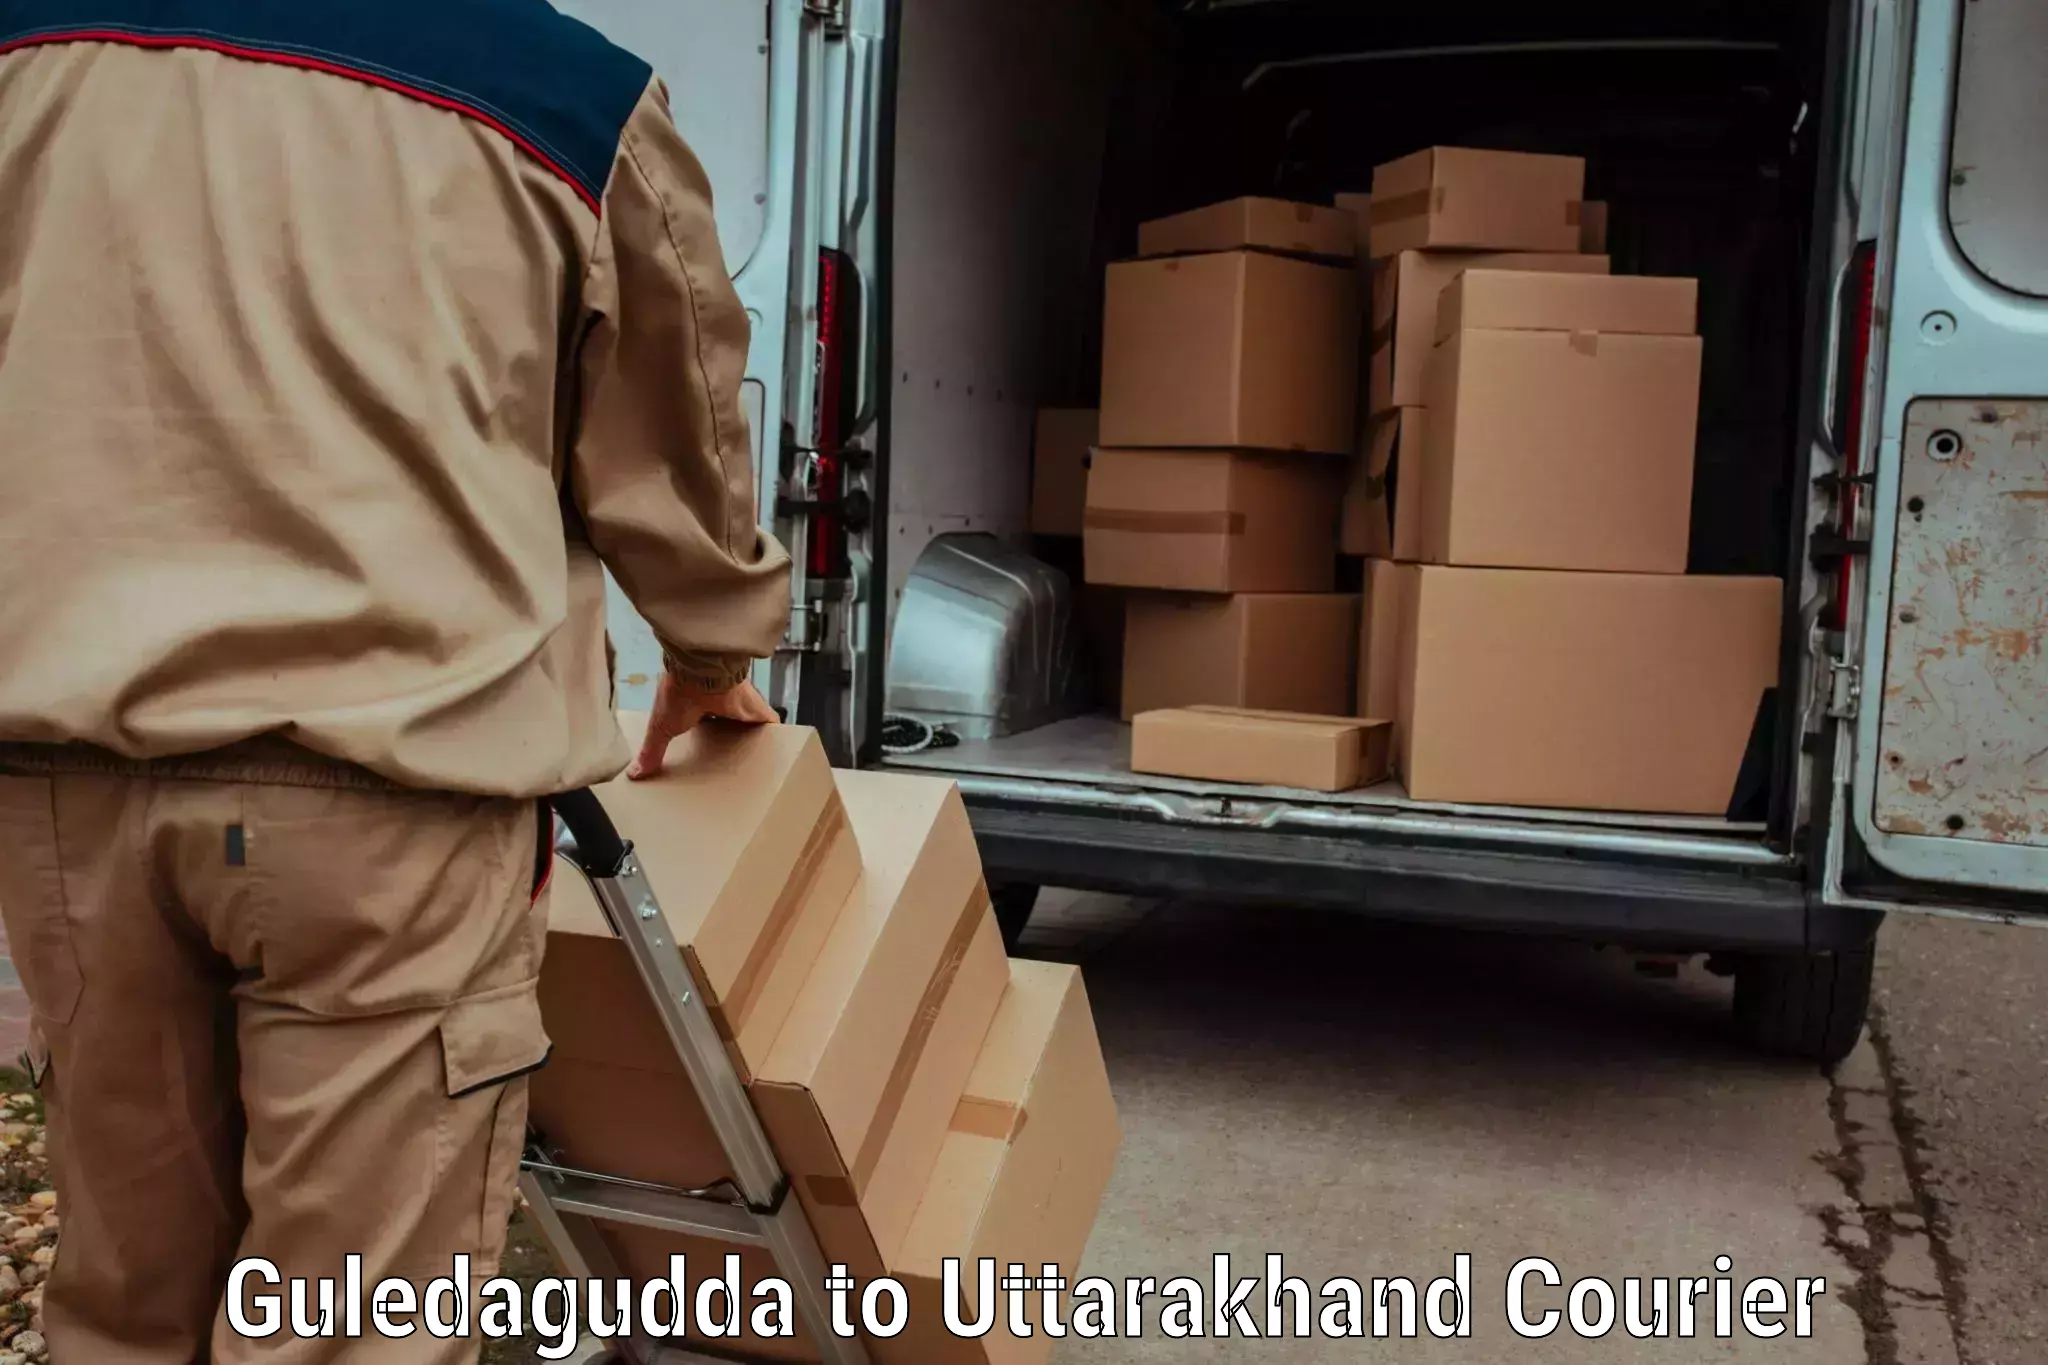 Efficient logistics management Guledagudda to Uttarakhand